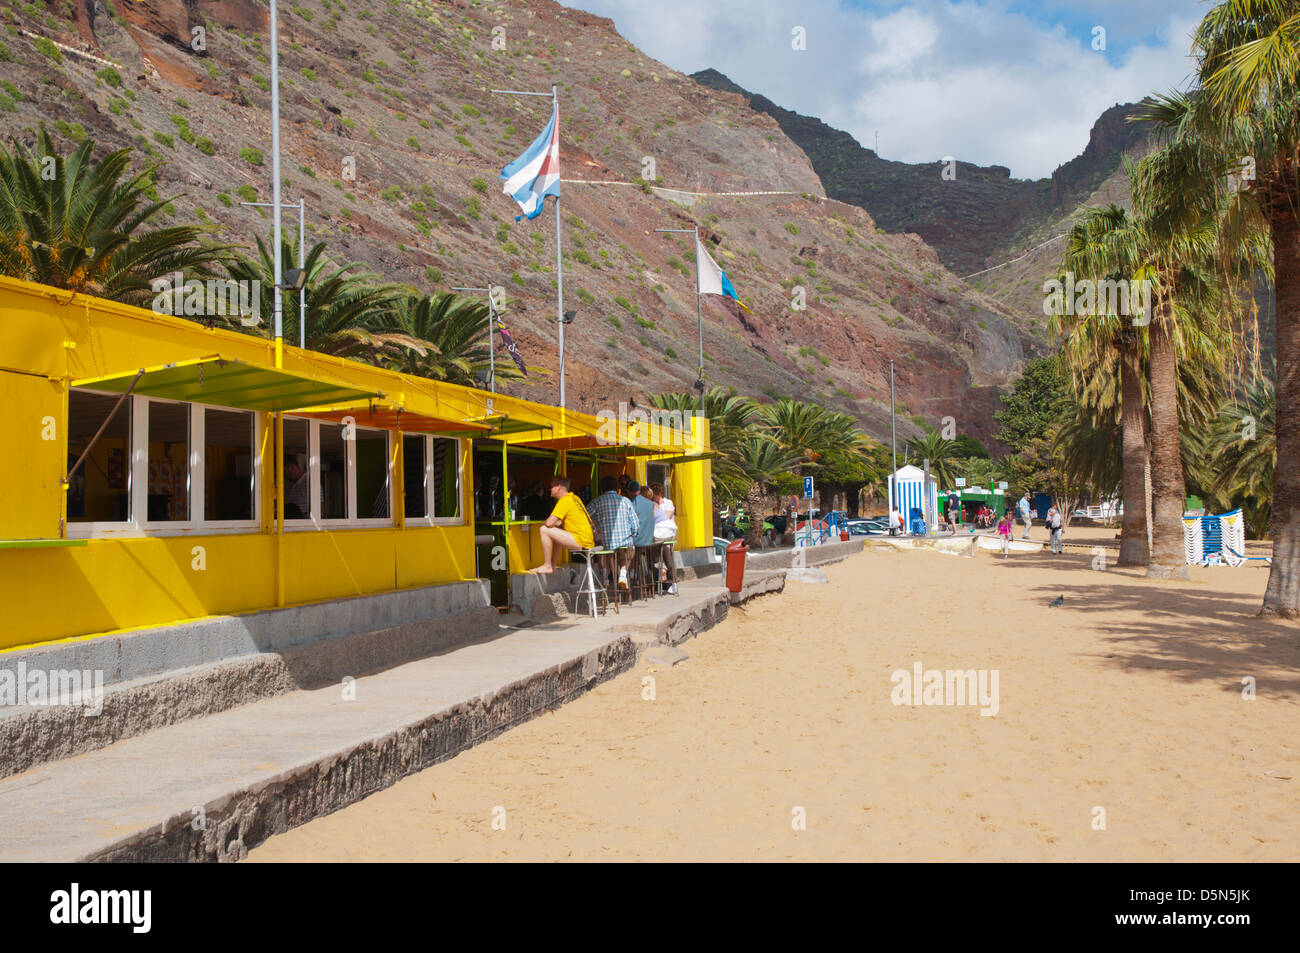 Snack bar kiosk at Playa de las Teresitas beach San Andres town Tenerife island the Canary Islands Spain Europe Stock Photo